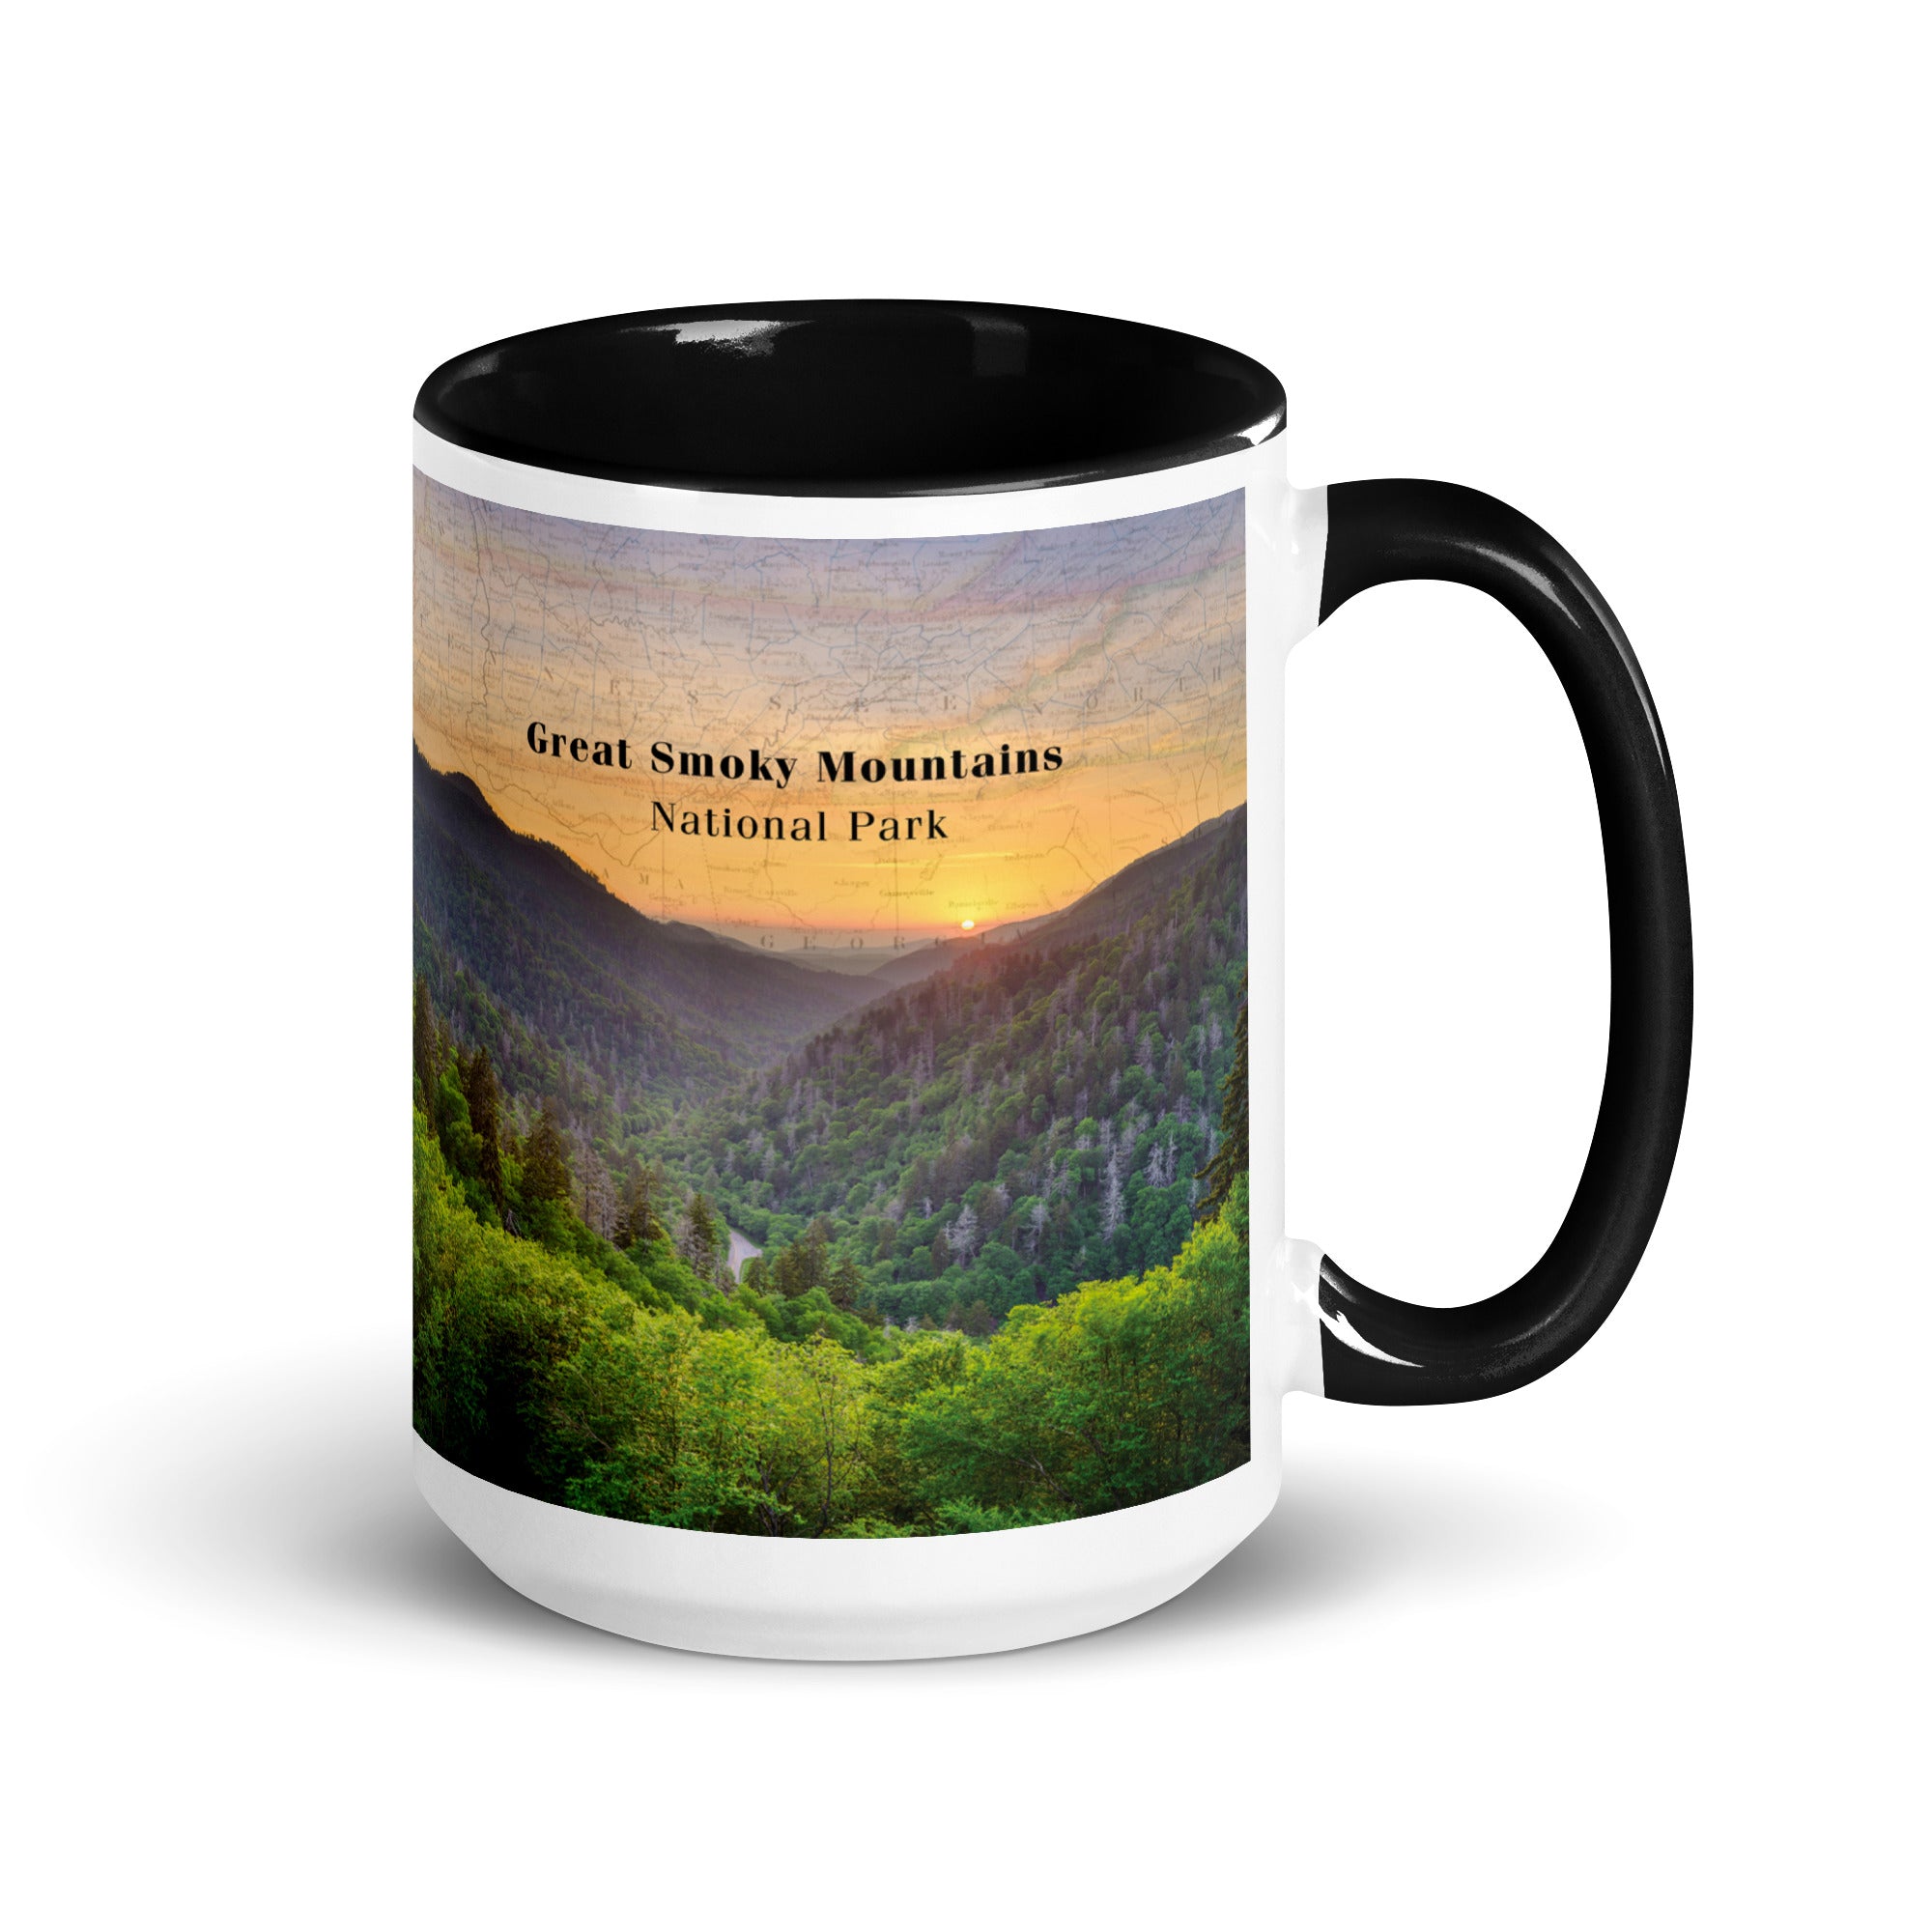 Great Smoky Mountains National Park Mug with Black Inside